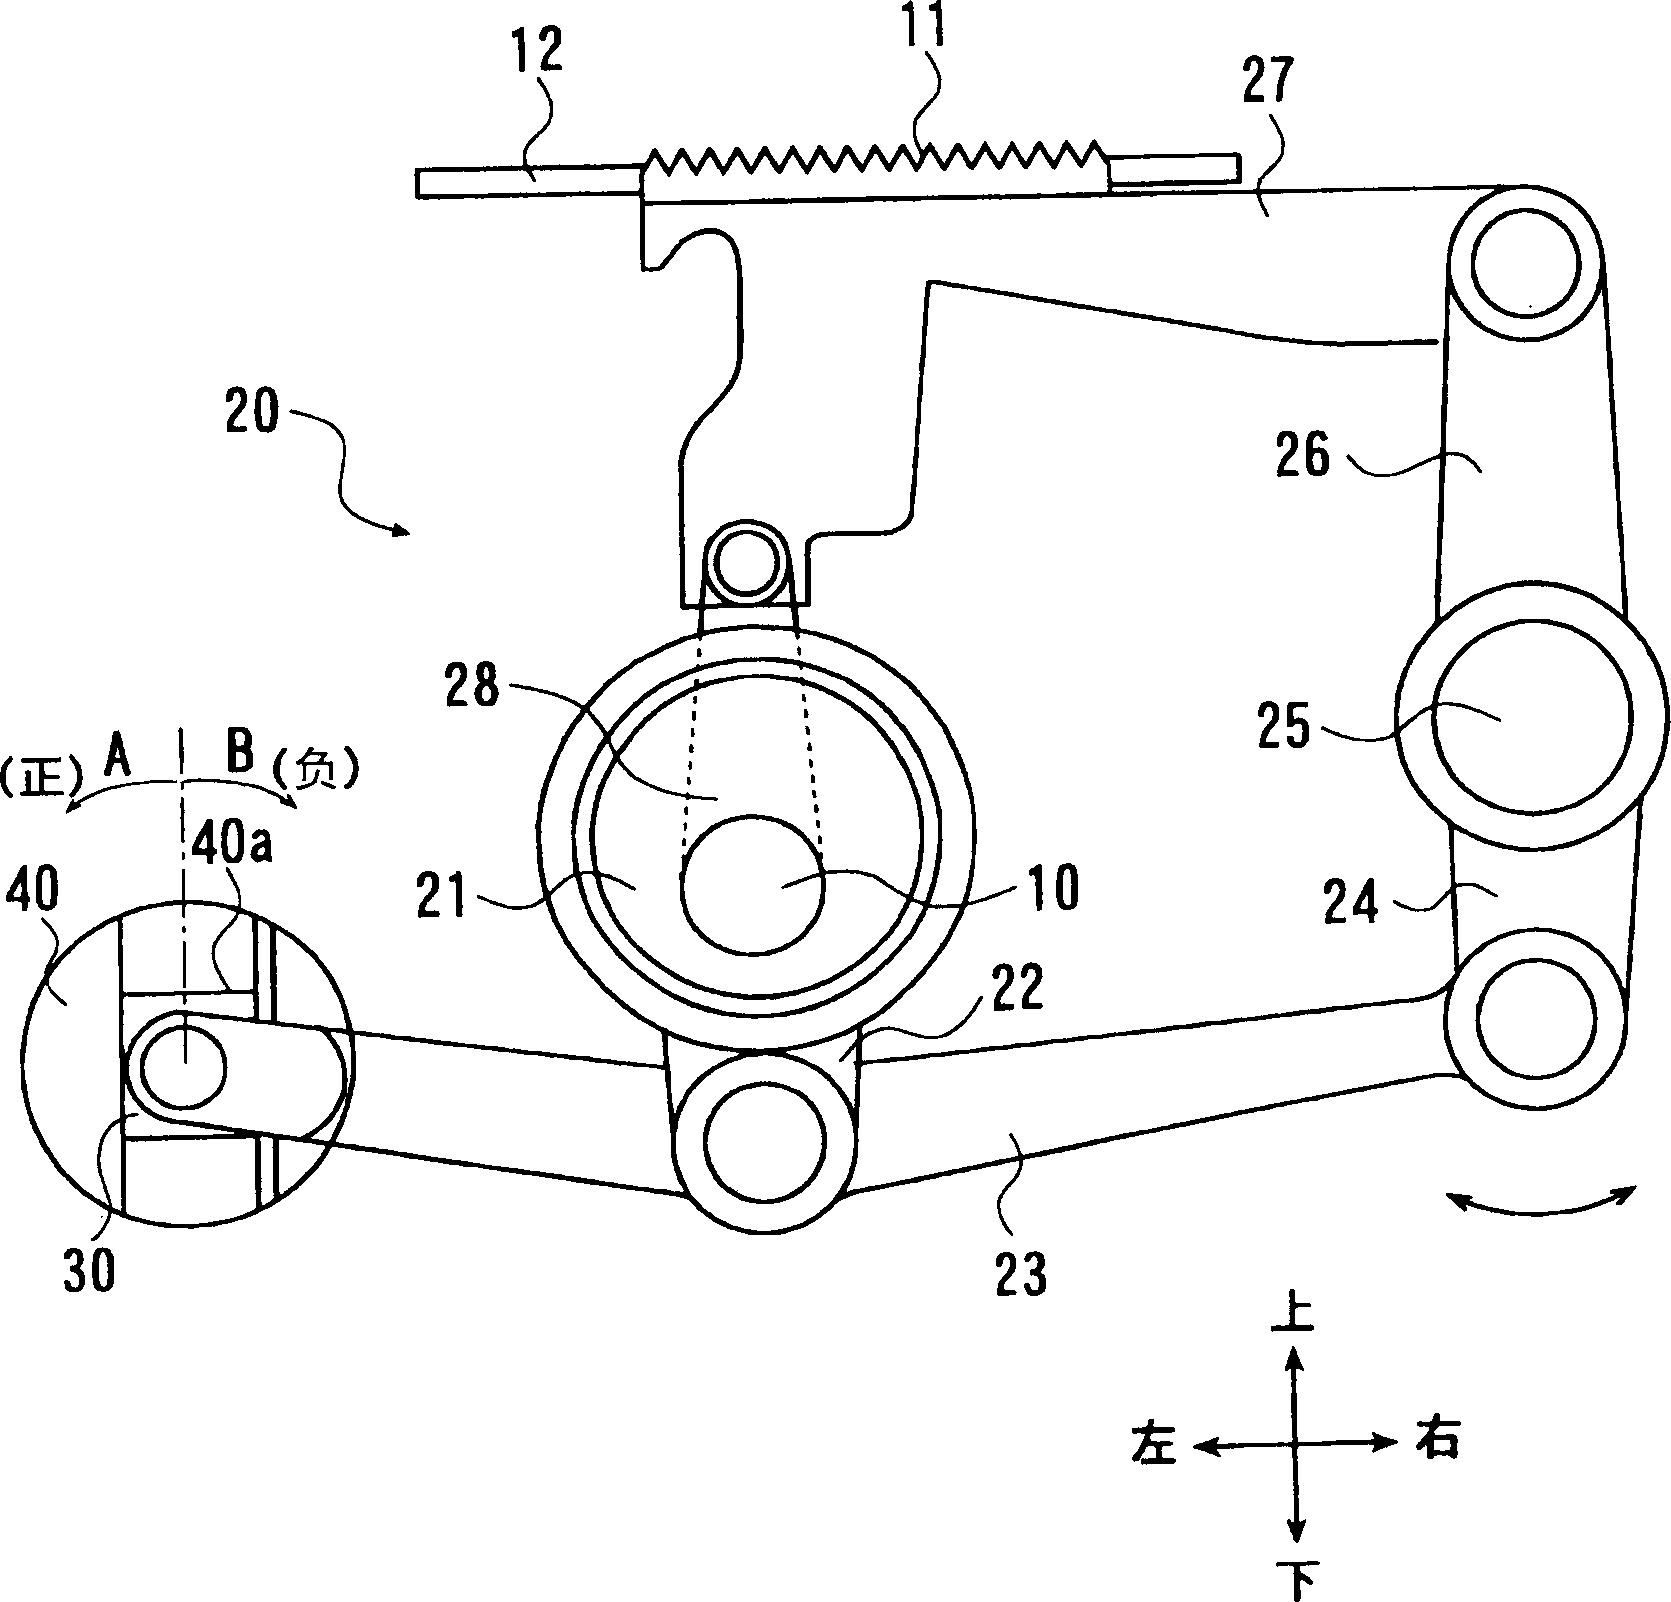 Cloth feeding mechanism of sewing machine